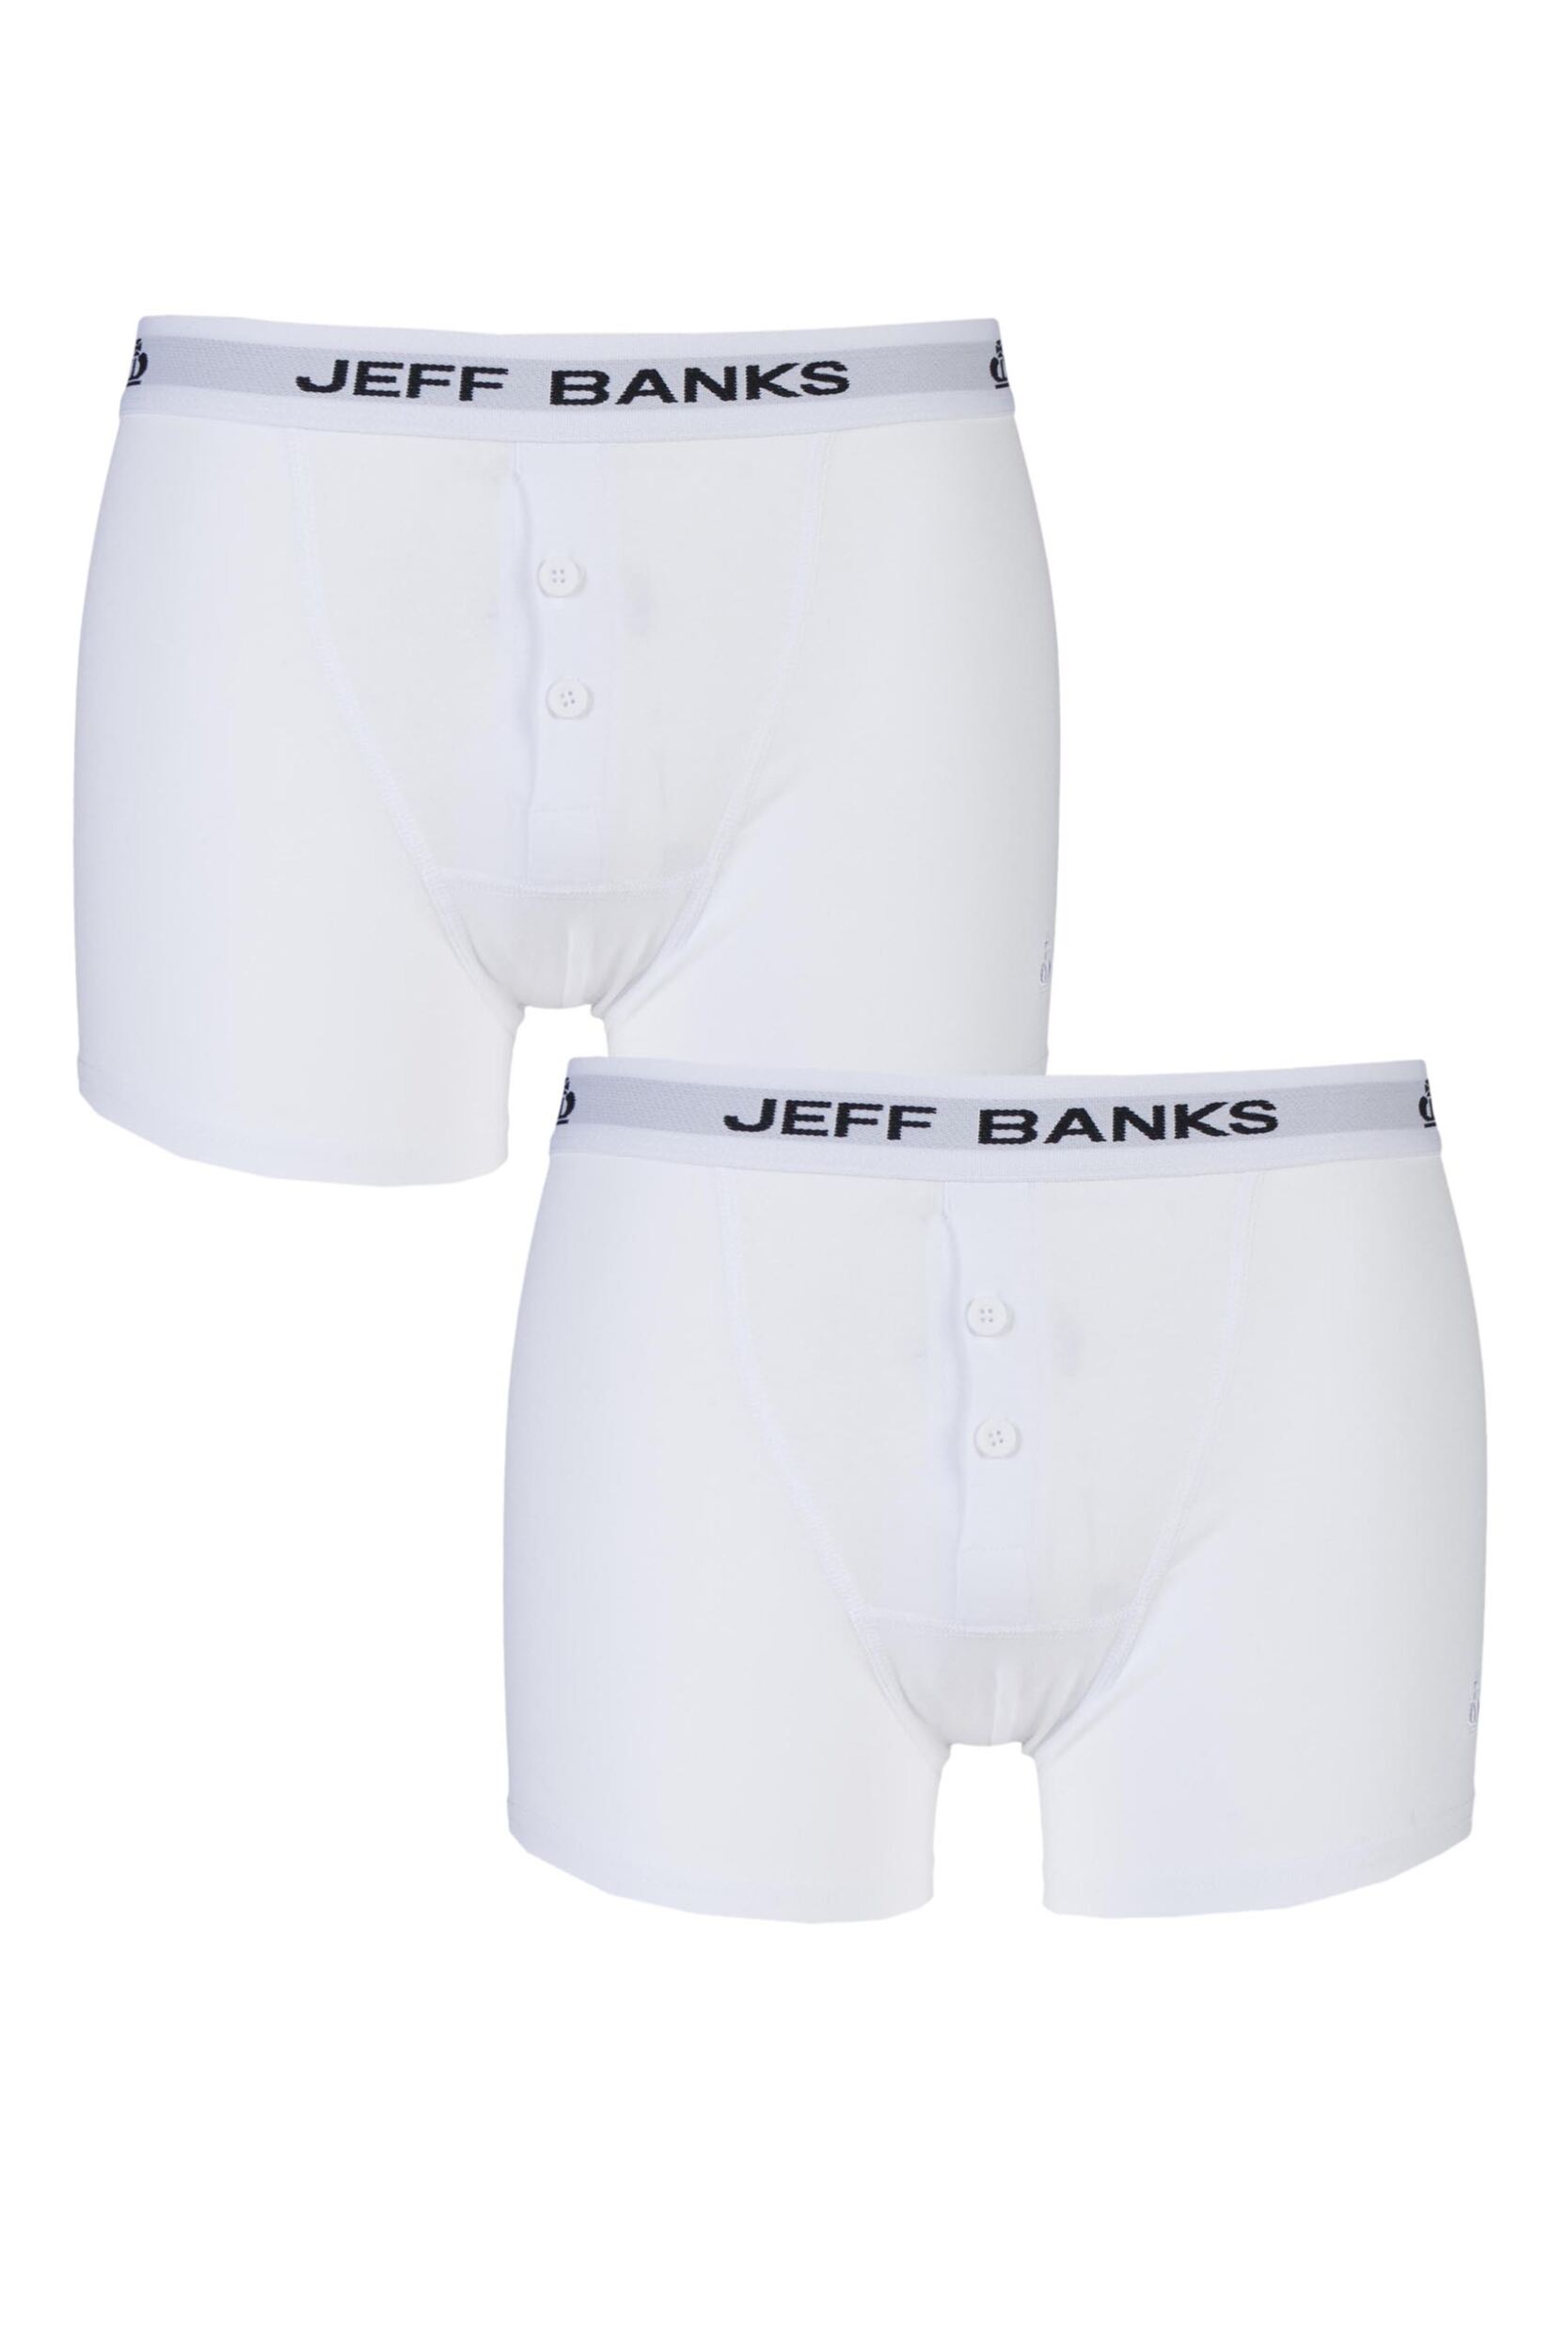 2 Pack White Plymouth Button Cotton Boxer Shorts Men's Small - Jeff Banks